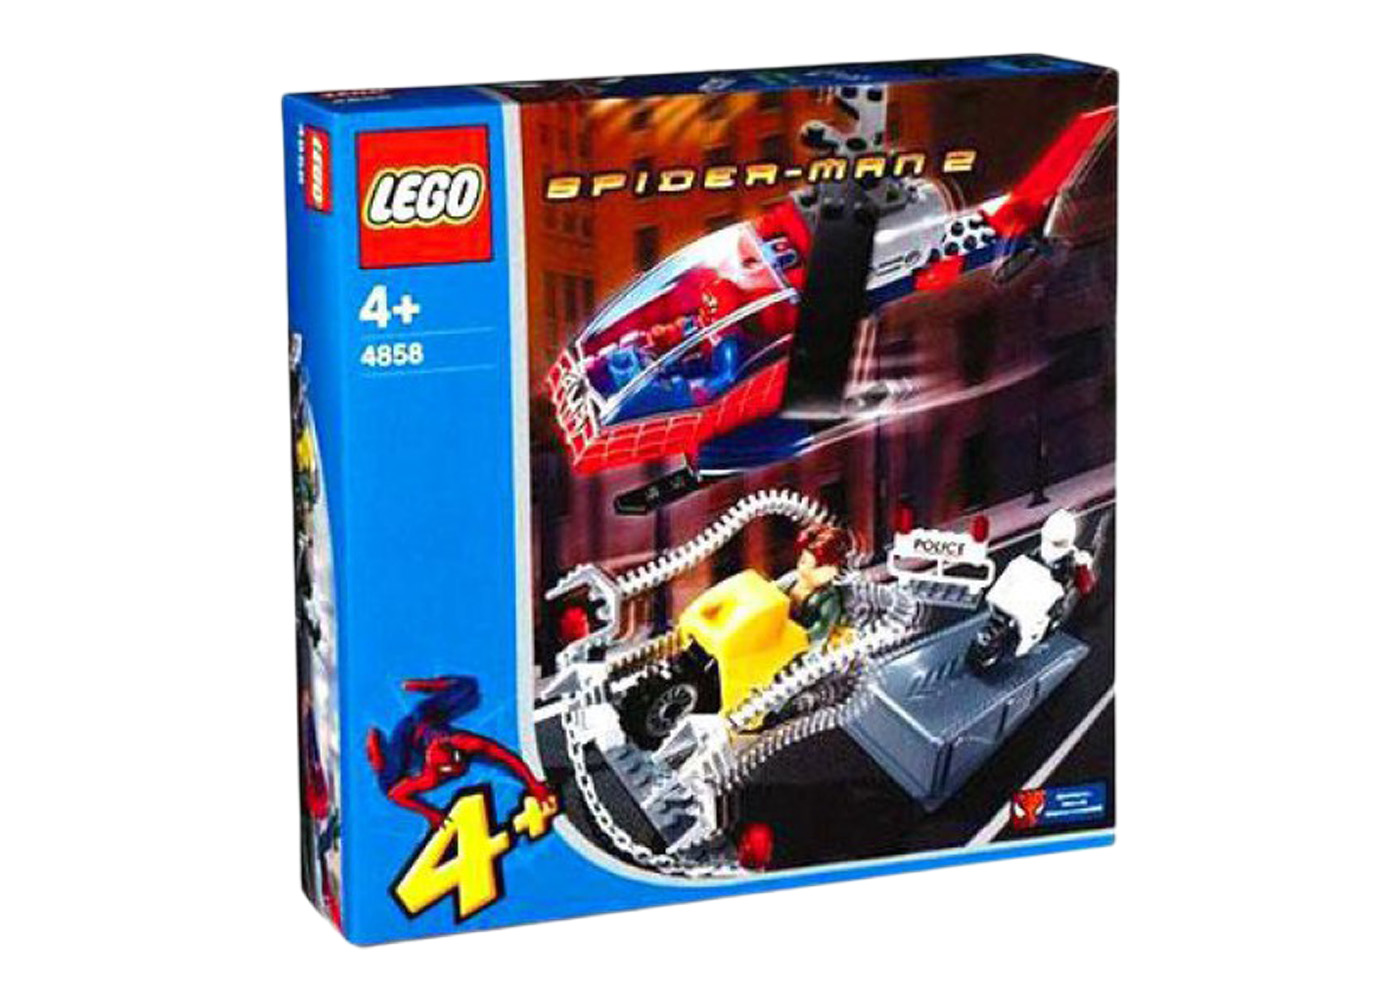 LEGO Spider-Man 2 Doc Ock's Crime Spree Set 4858 - US